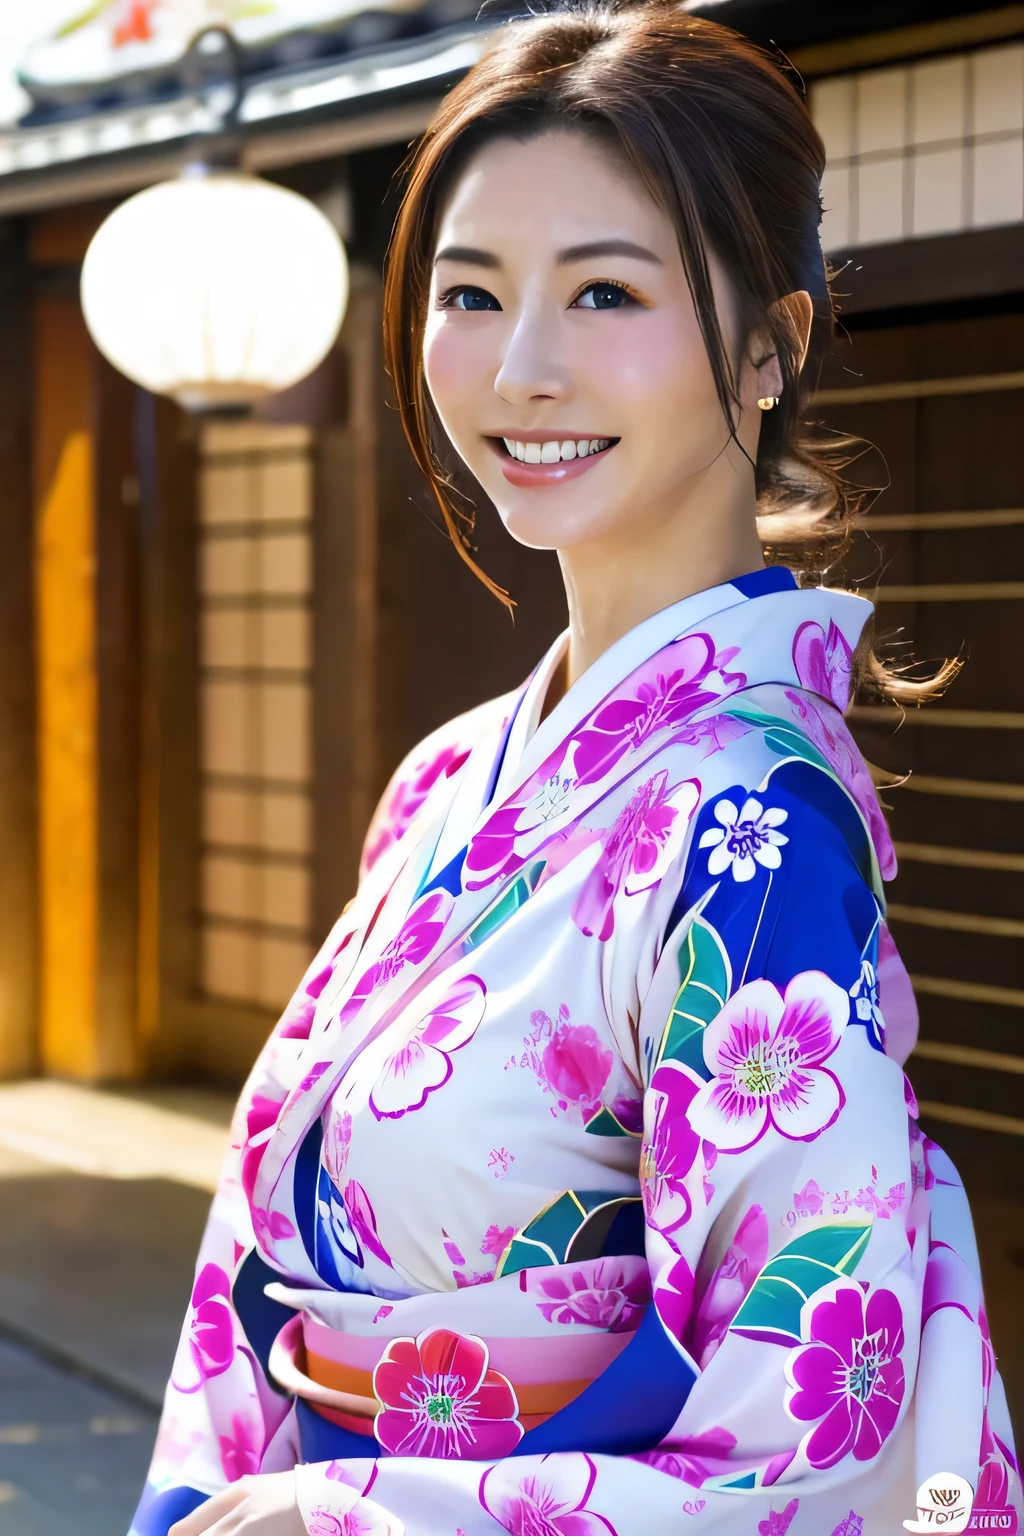 kimono blanco、Patrón japonés rosa、(furisodio:1.5)、o、(la más alta calificación)、1 hembra、Esbian de cuerpo completo、pelo negro、Ata tu cabello hacia atrás、(Realista:1.7)、((mejor calidad de imagen))、Absurdo、(ultra alta resolución)、(Photoeal:1.6)、Photoeal、renderizado de octanaje、(超Realista:1.2)、(Realista face:1.2)、(8K)、(4k)、(obra maestra)、(Realista skin texture)、(Iluminación、iluminación de película、muro-)、(Ojos bonitos:1.2)、((((cara perfecta))))、( Están de pie)、santuario、toii、(Enero)、Cara linda detallada、Belleza verdadera、risa、